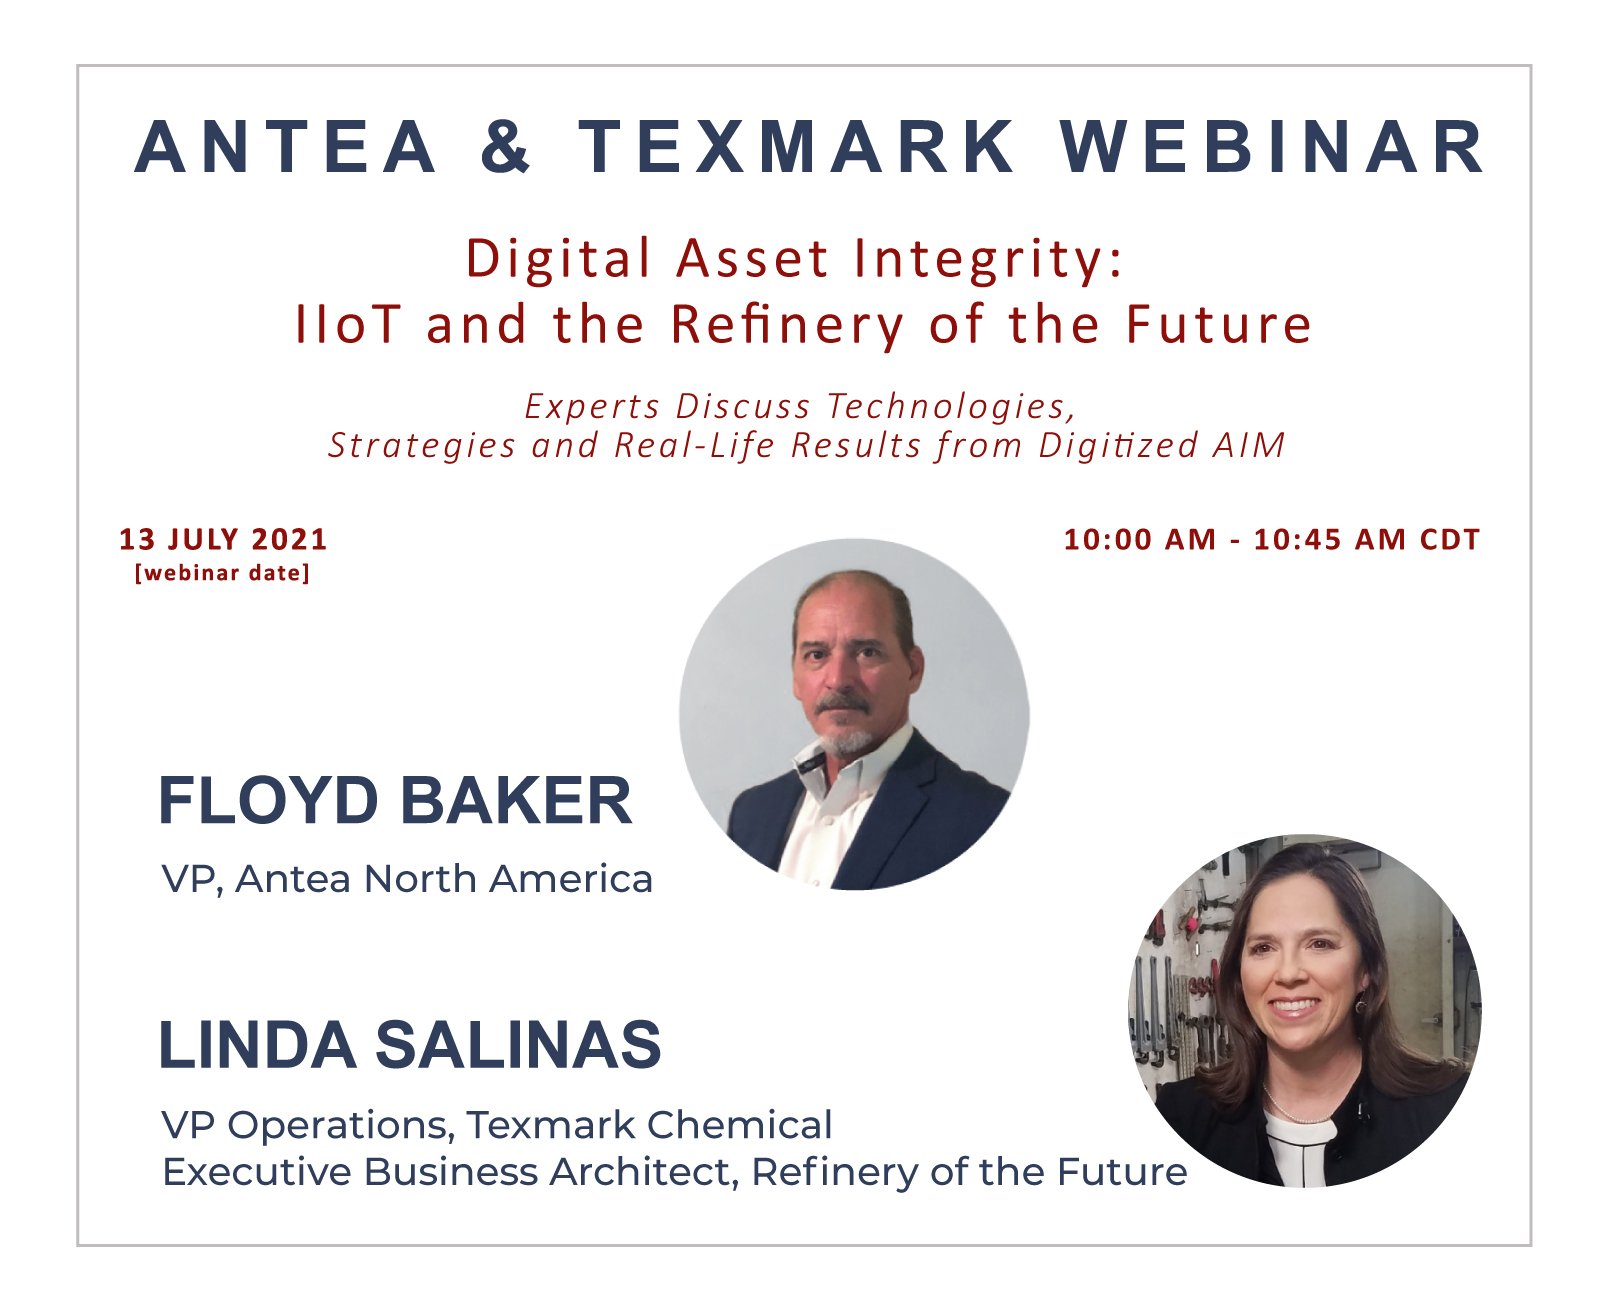 Antea & TexMark Webinar: Digital Asset Integrity